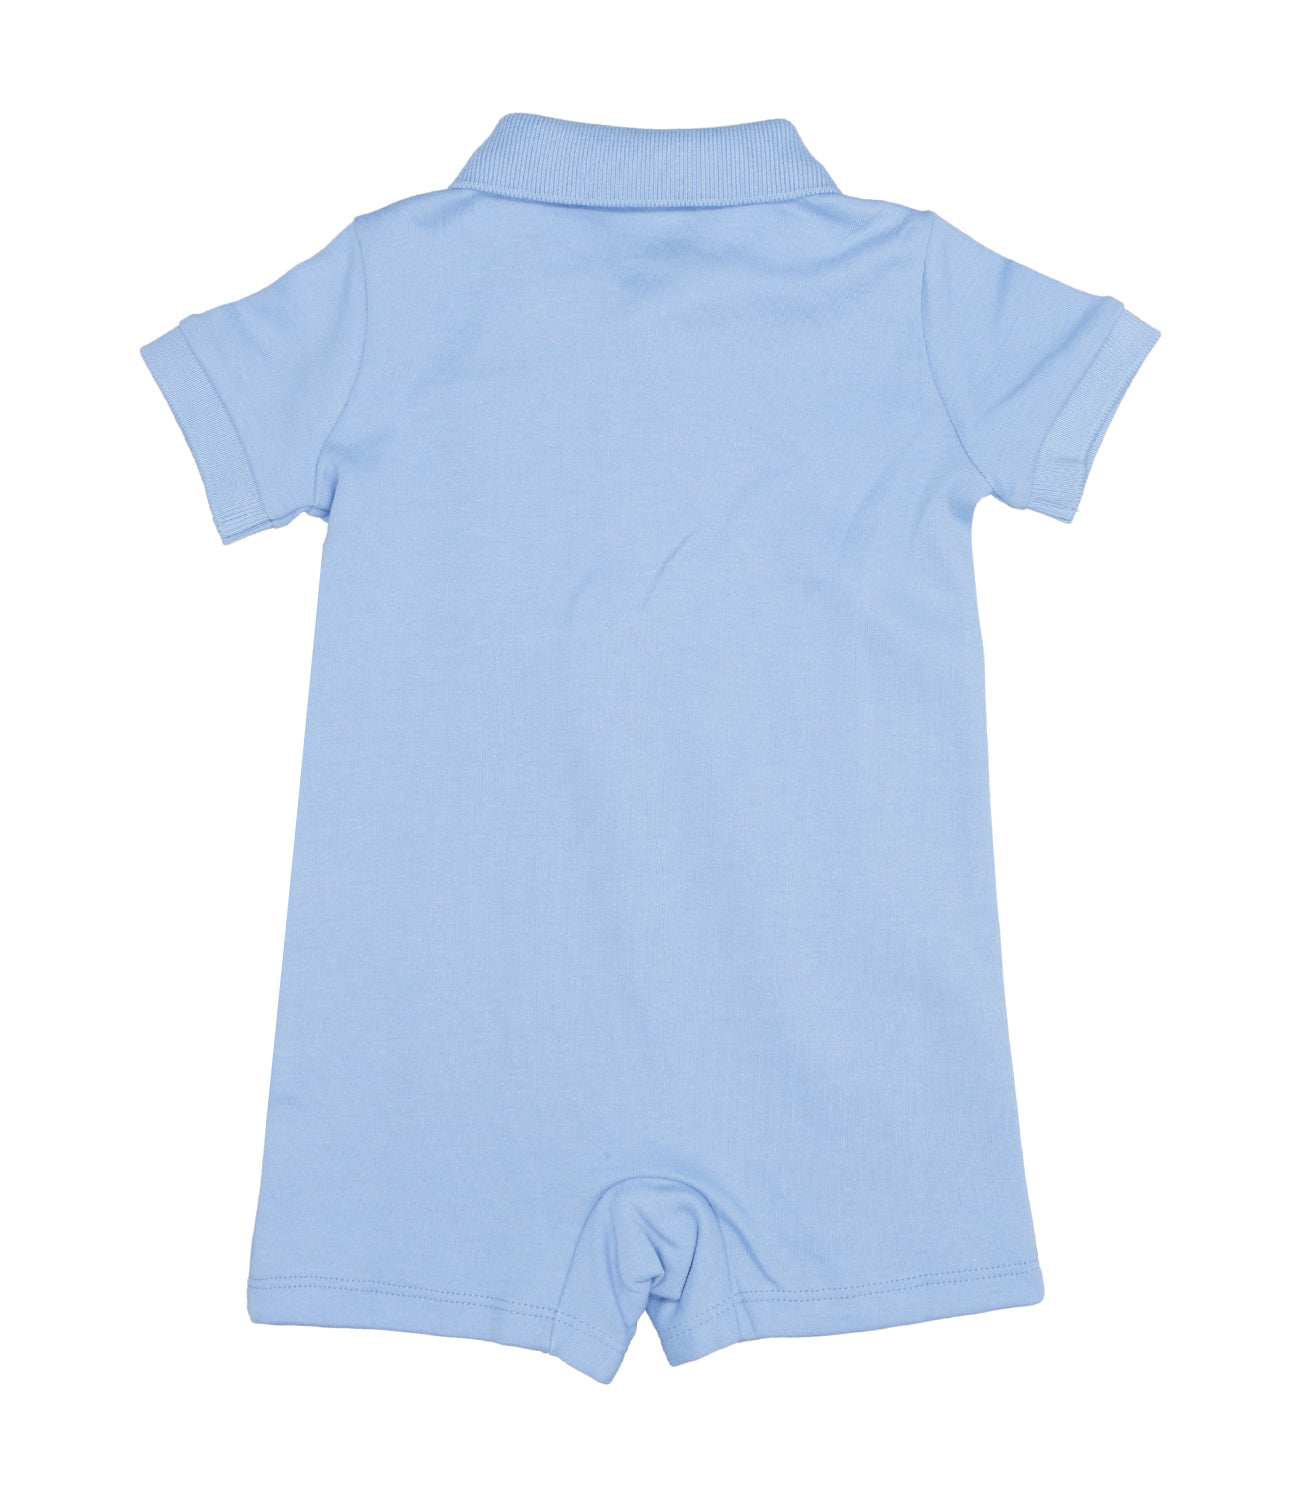 Ralph Lauren Childrenswear | Light Blue Sleepsuit